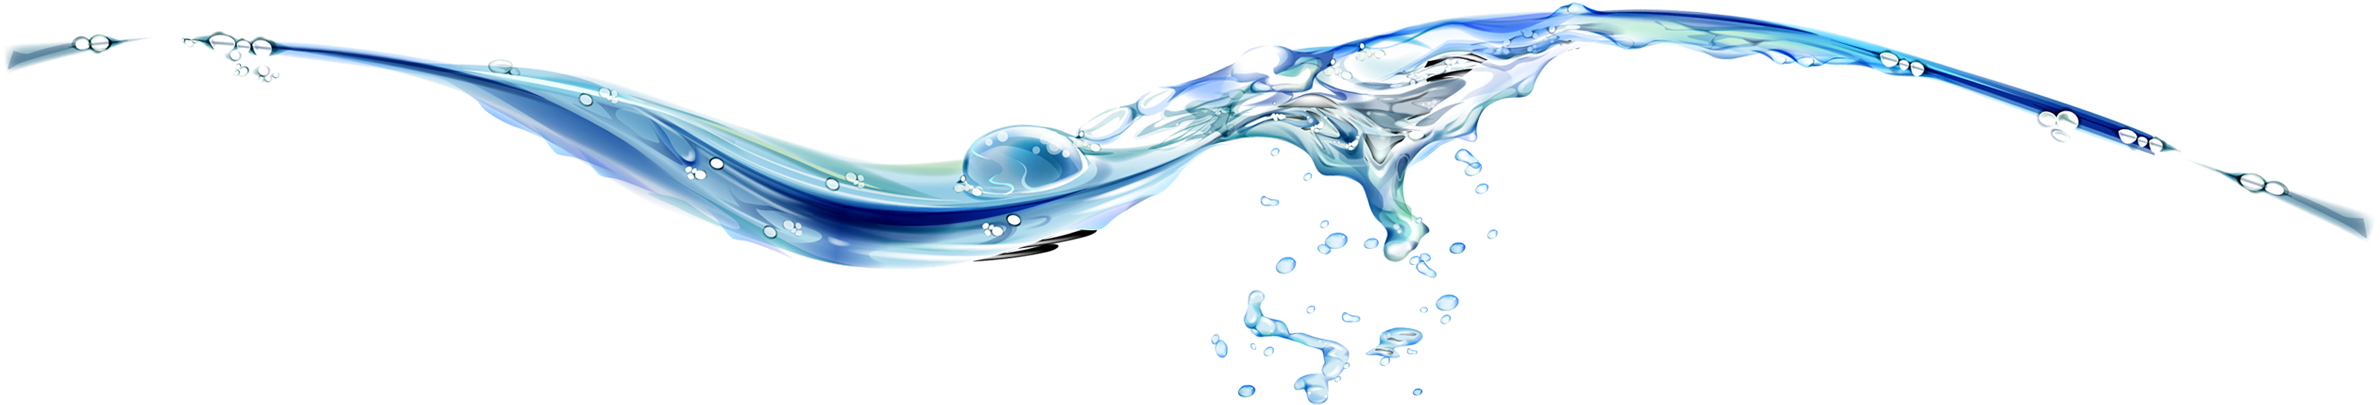 Fluid Dynamics Water Splashand Bubbles PNG